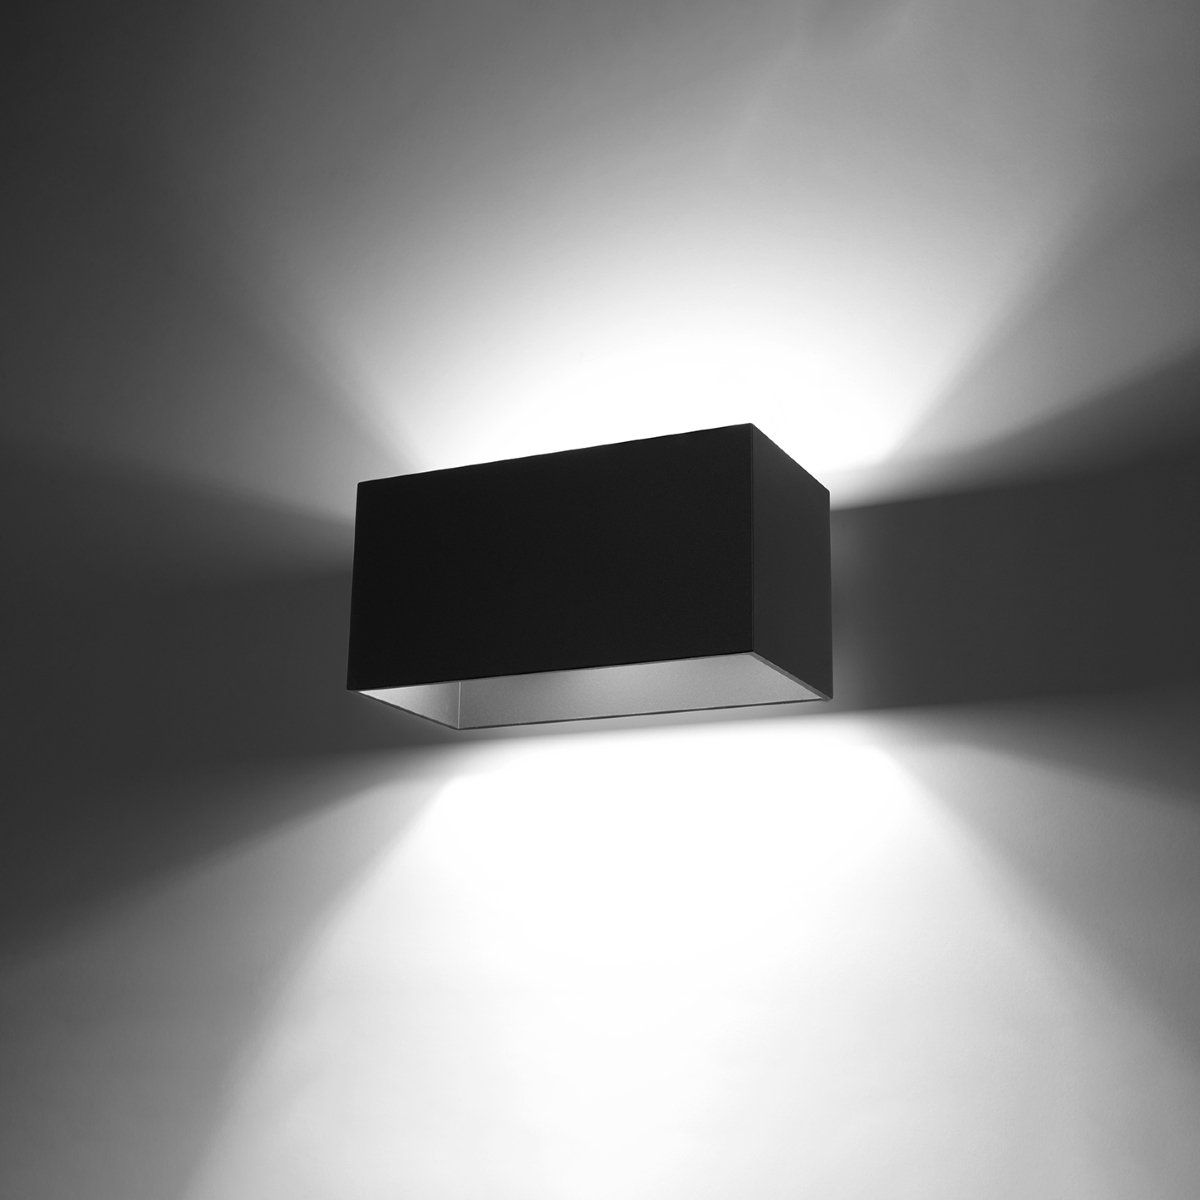 Sieninis šviestuvas SOLLUX QUAD MAXI juodas, 40 W - 3